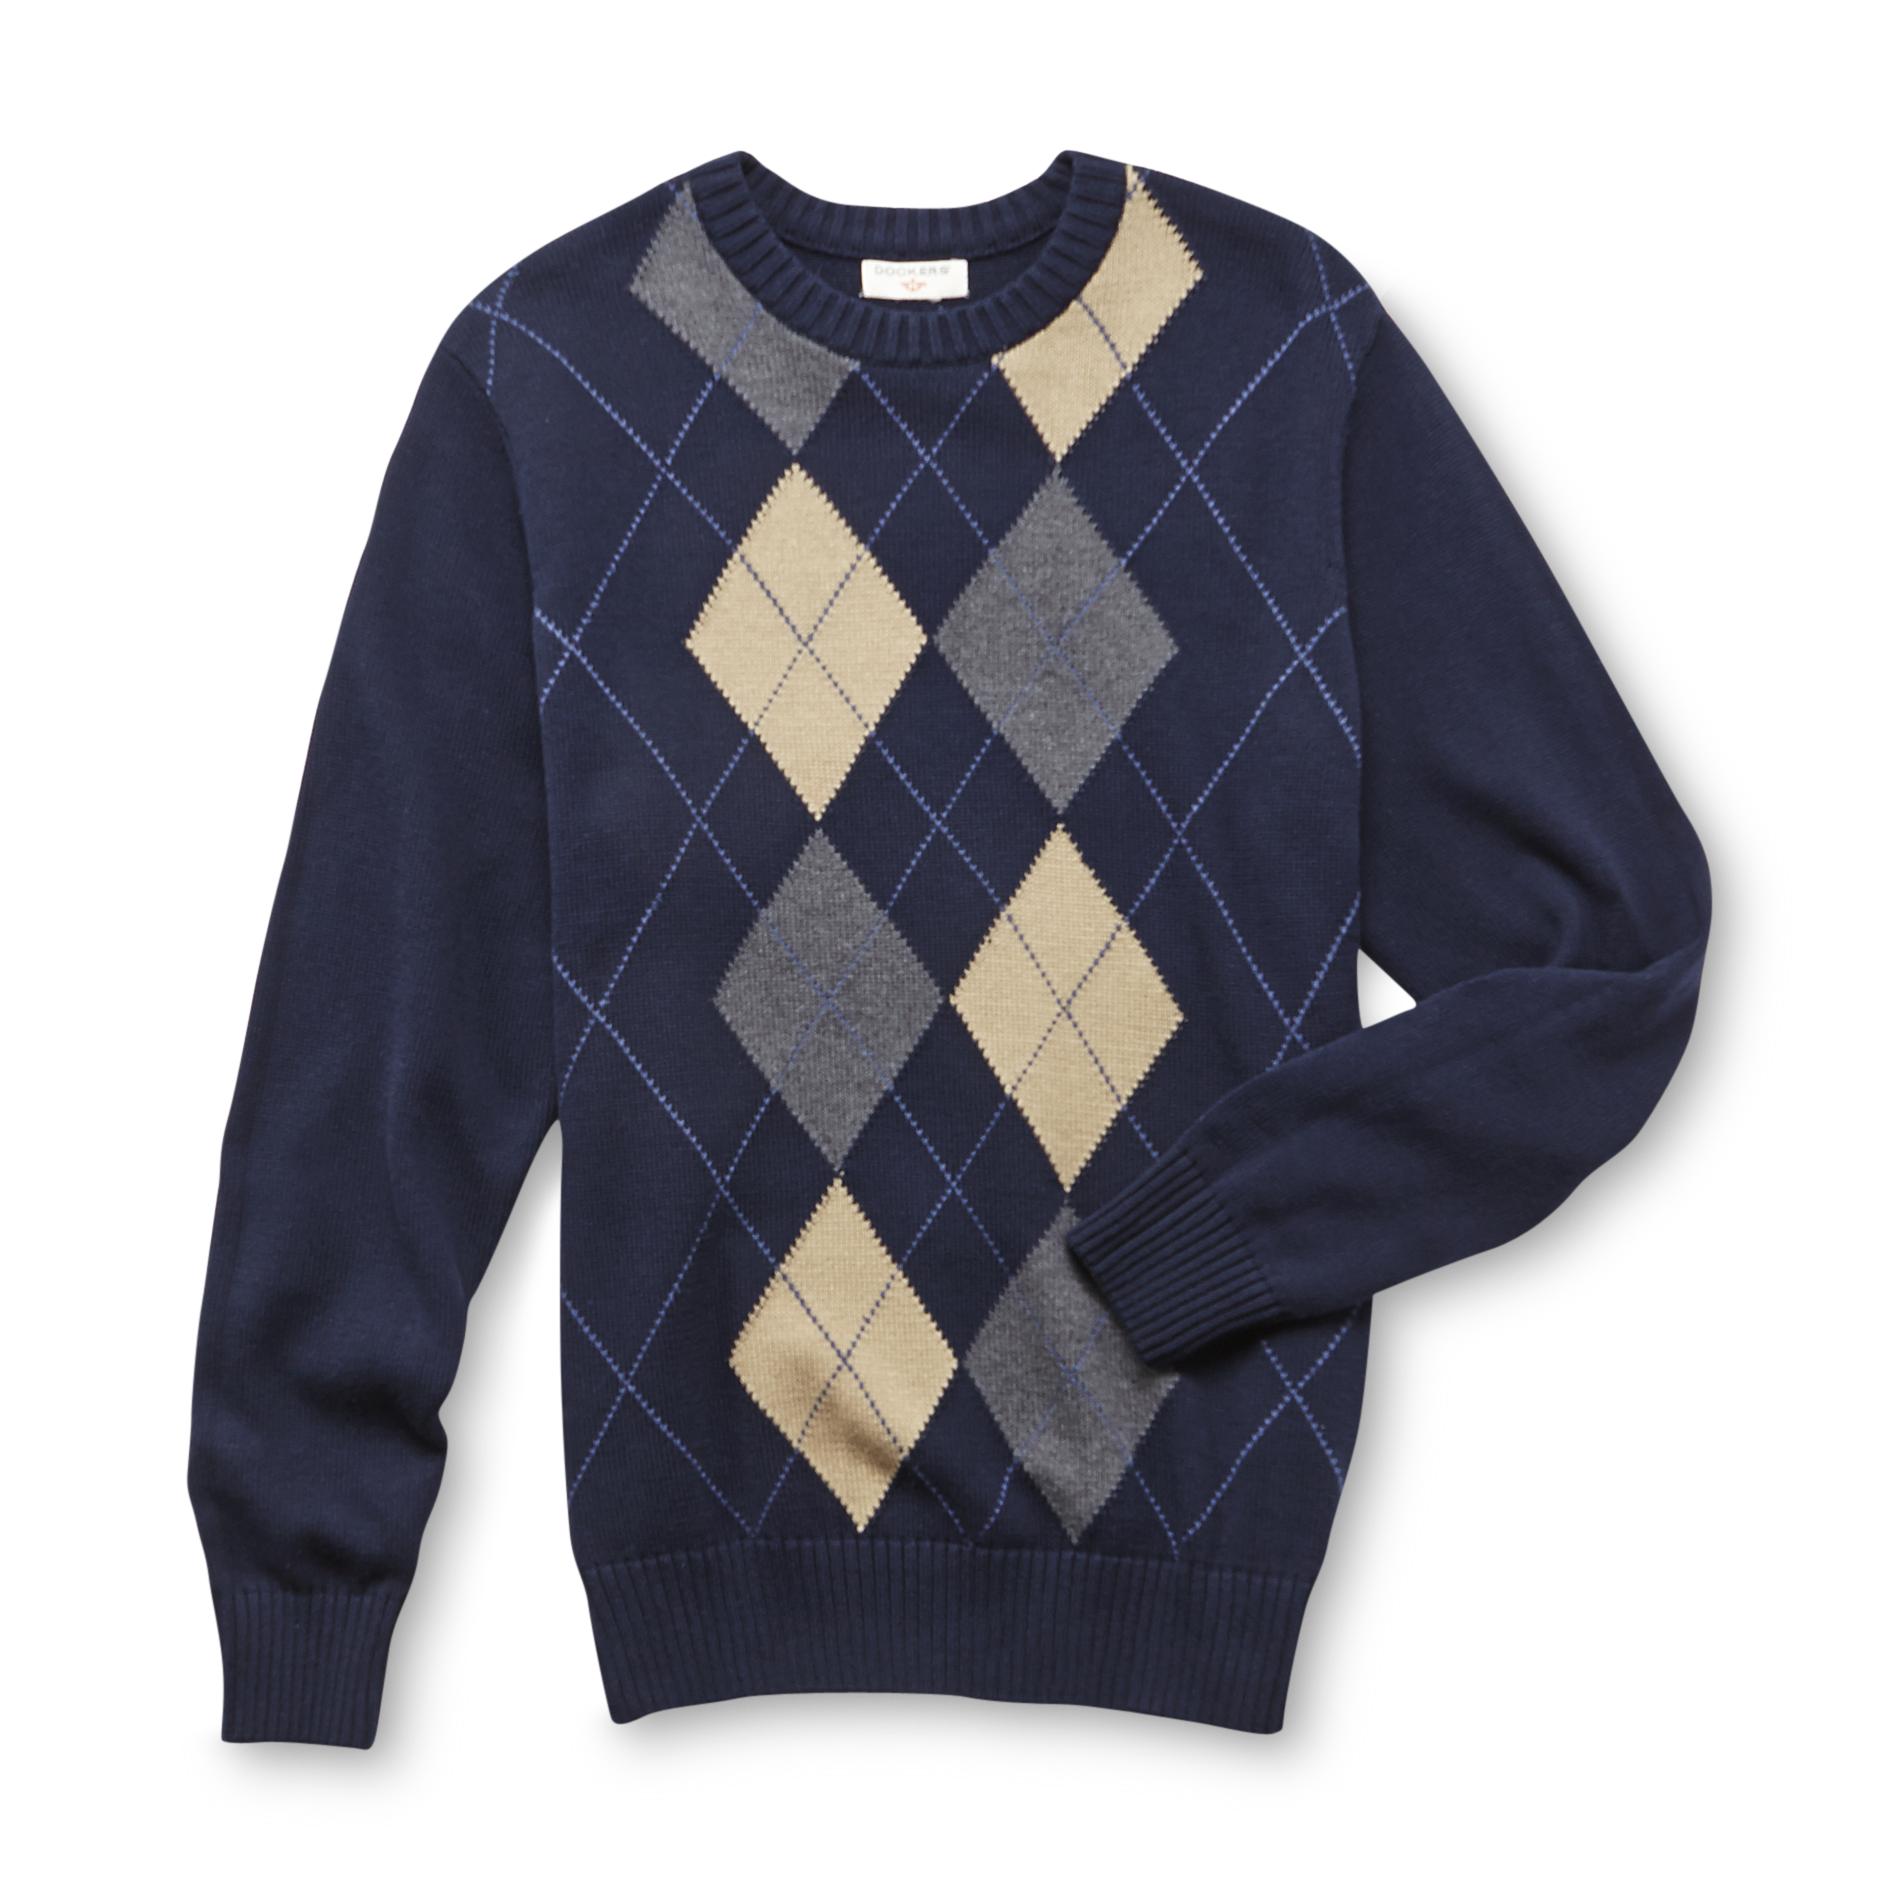 Dockers Men's Argyle Sweater